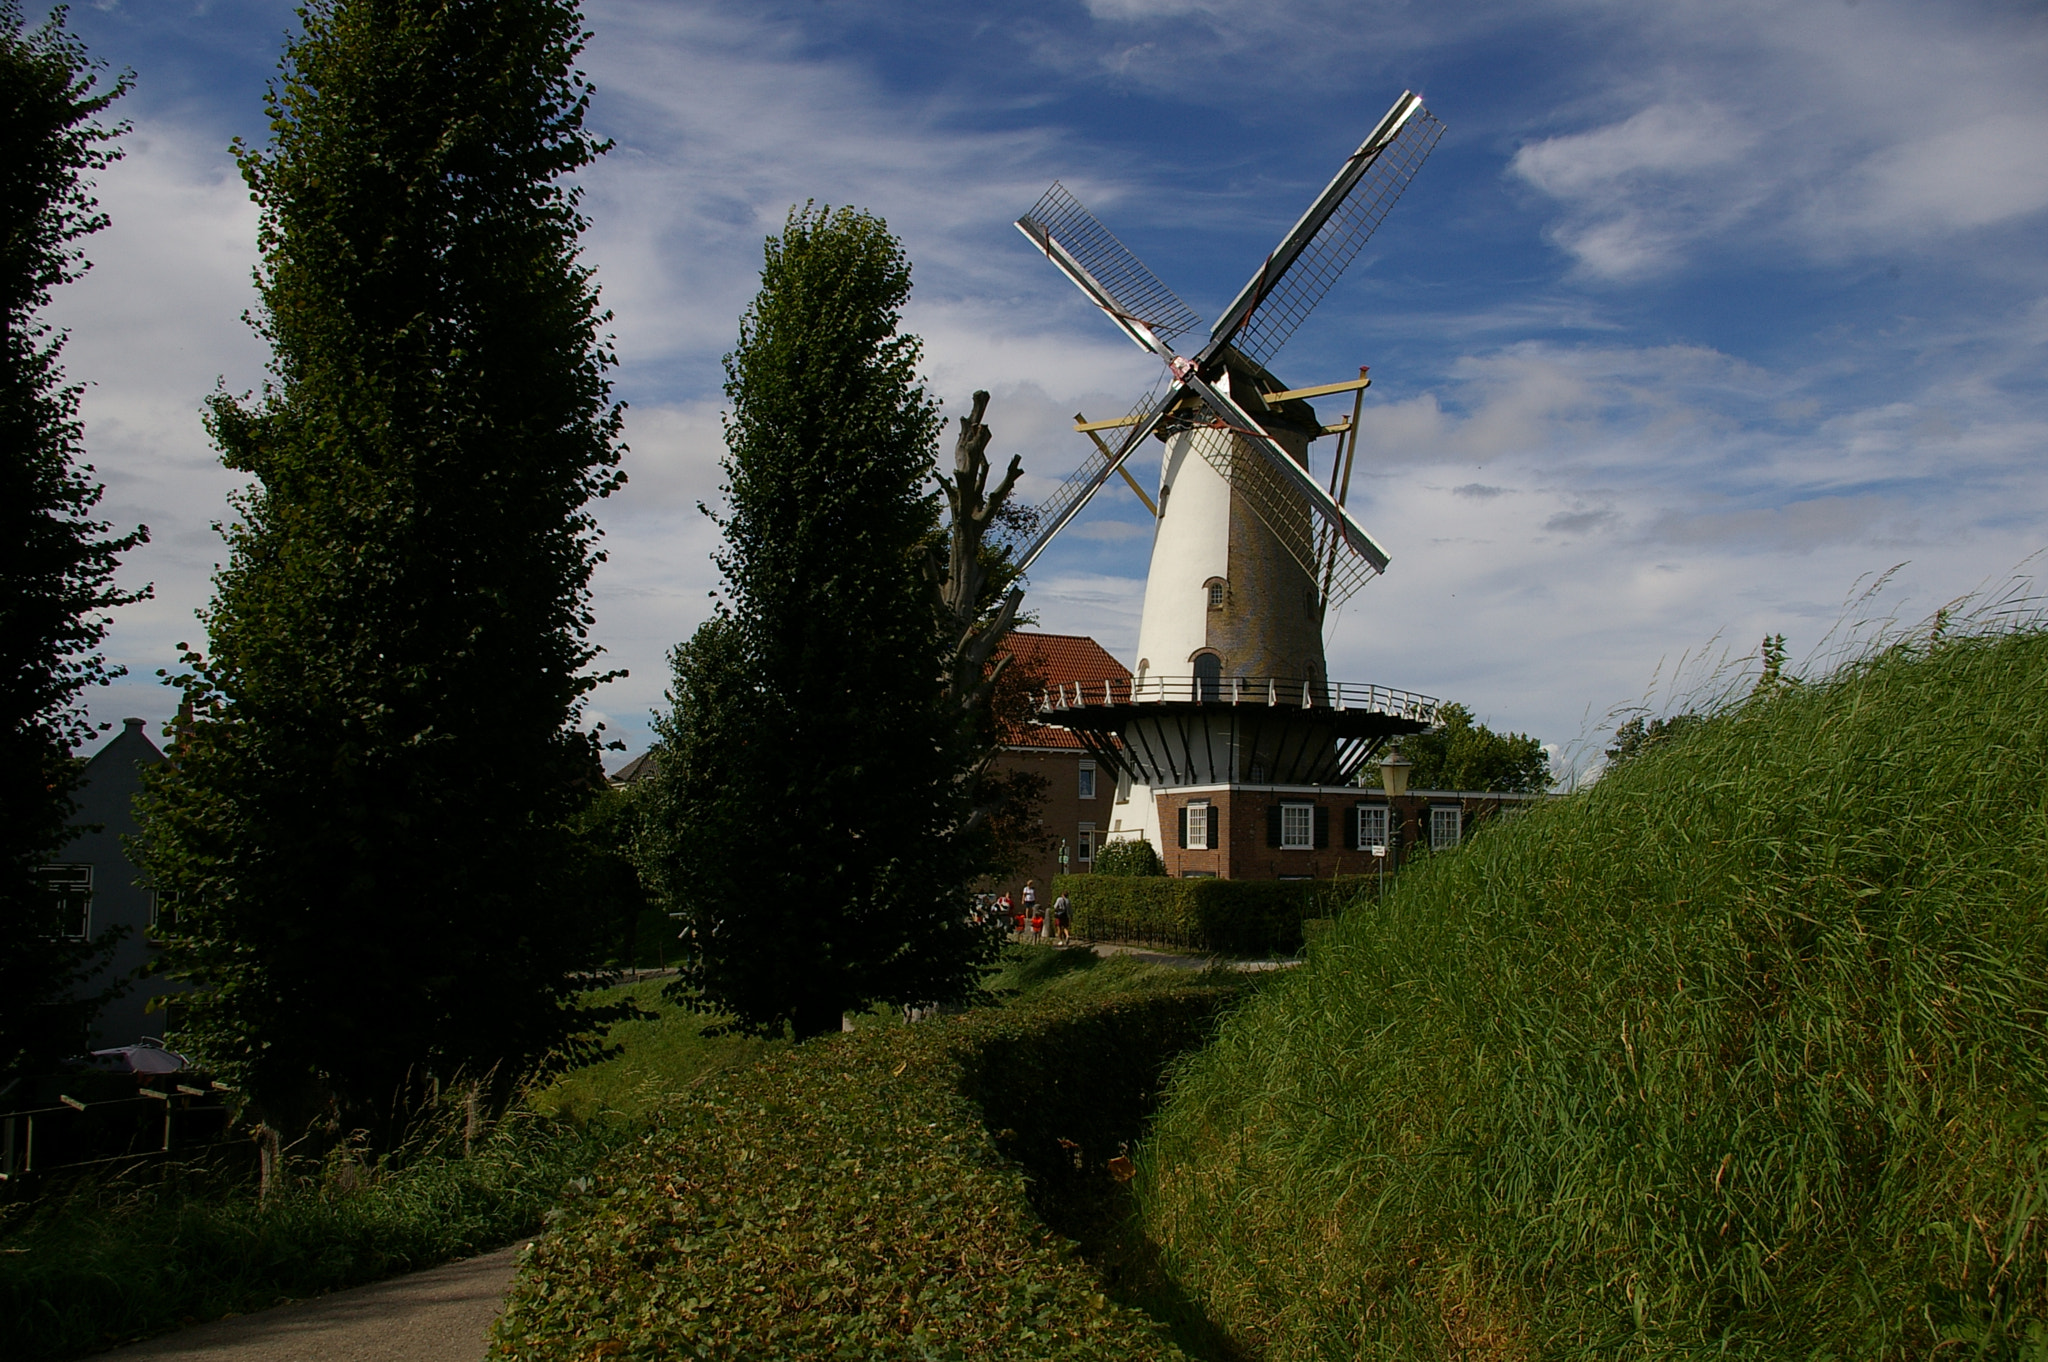 Pentax *ist DL sample photo. Windmill ii - willemstad photography